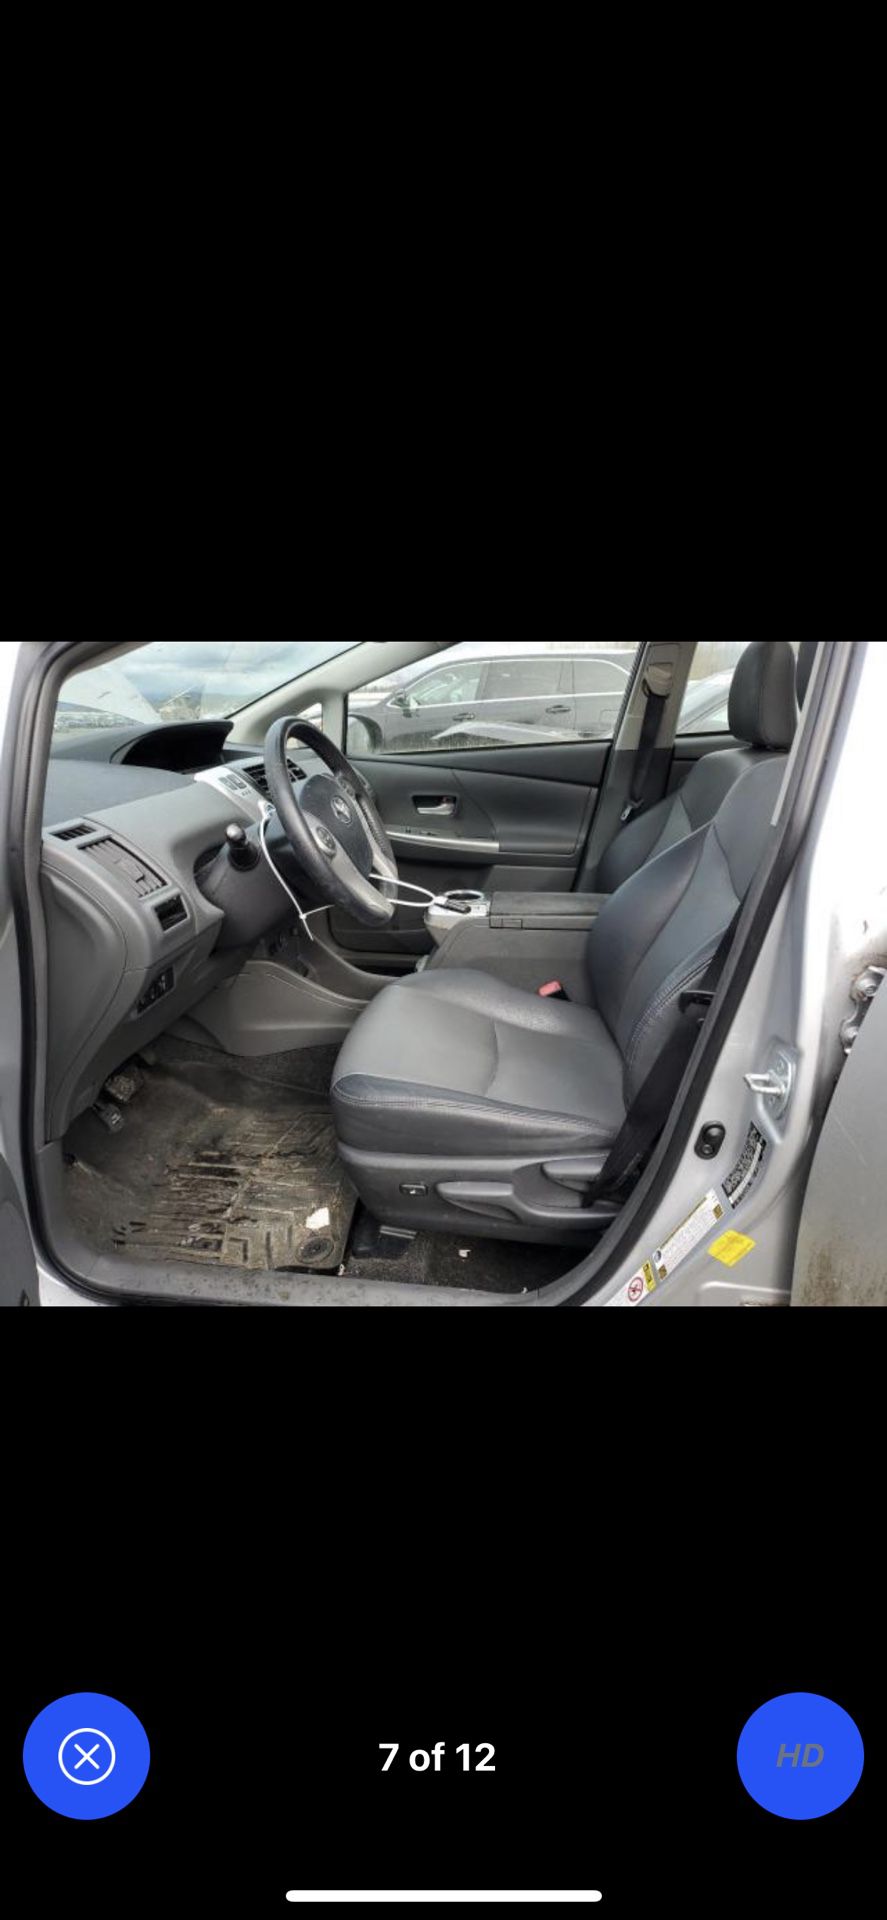 2012-2014 Toyota Prius V Leather Interior Seats Parts